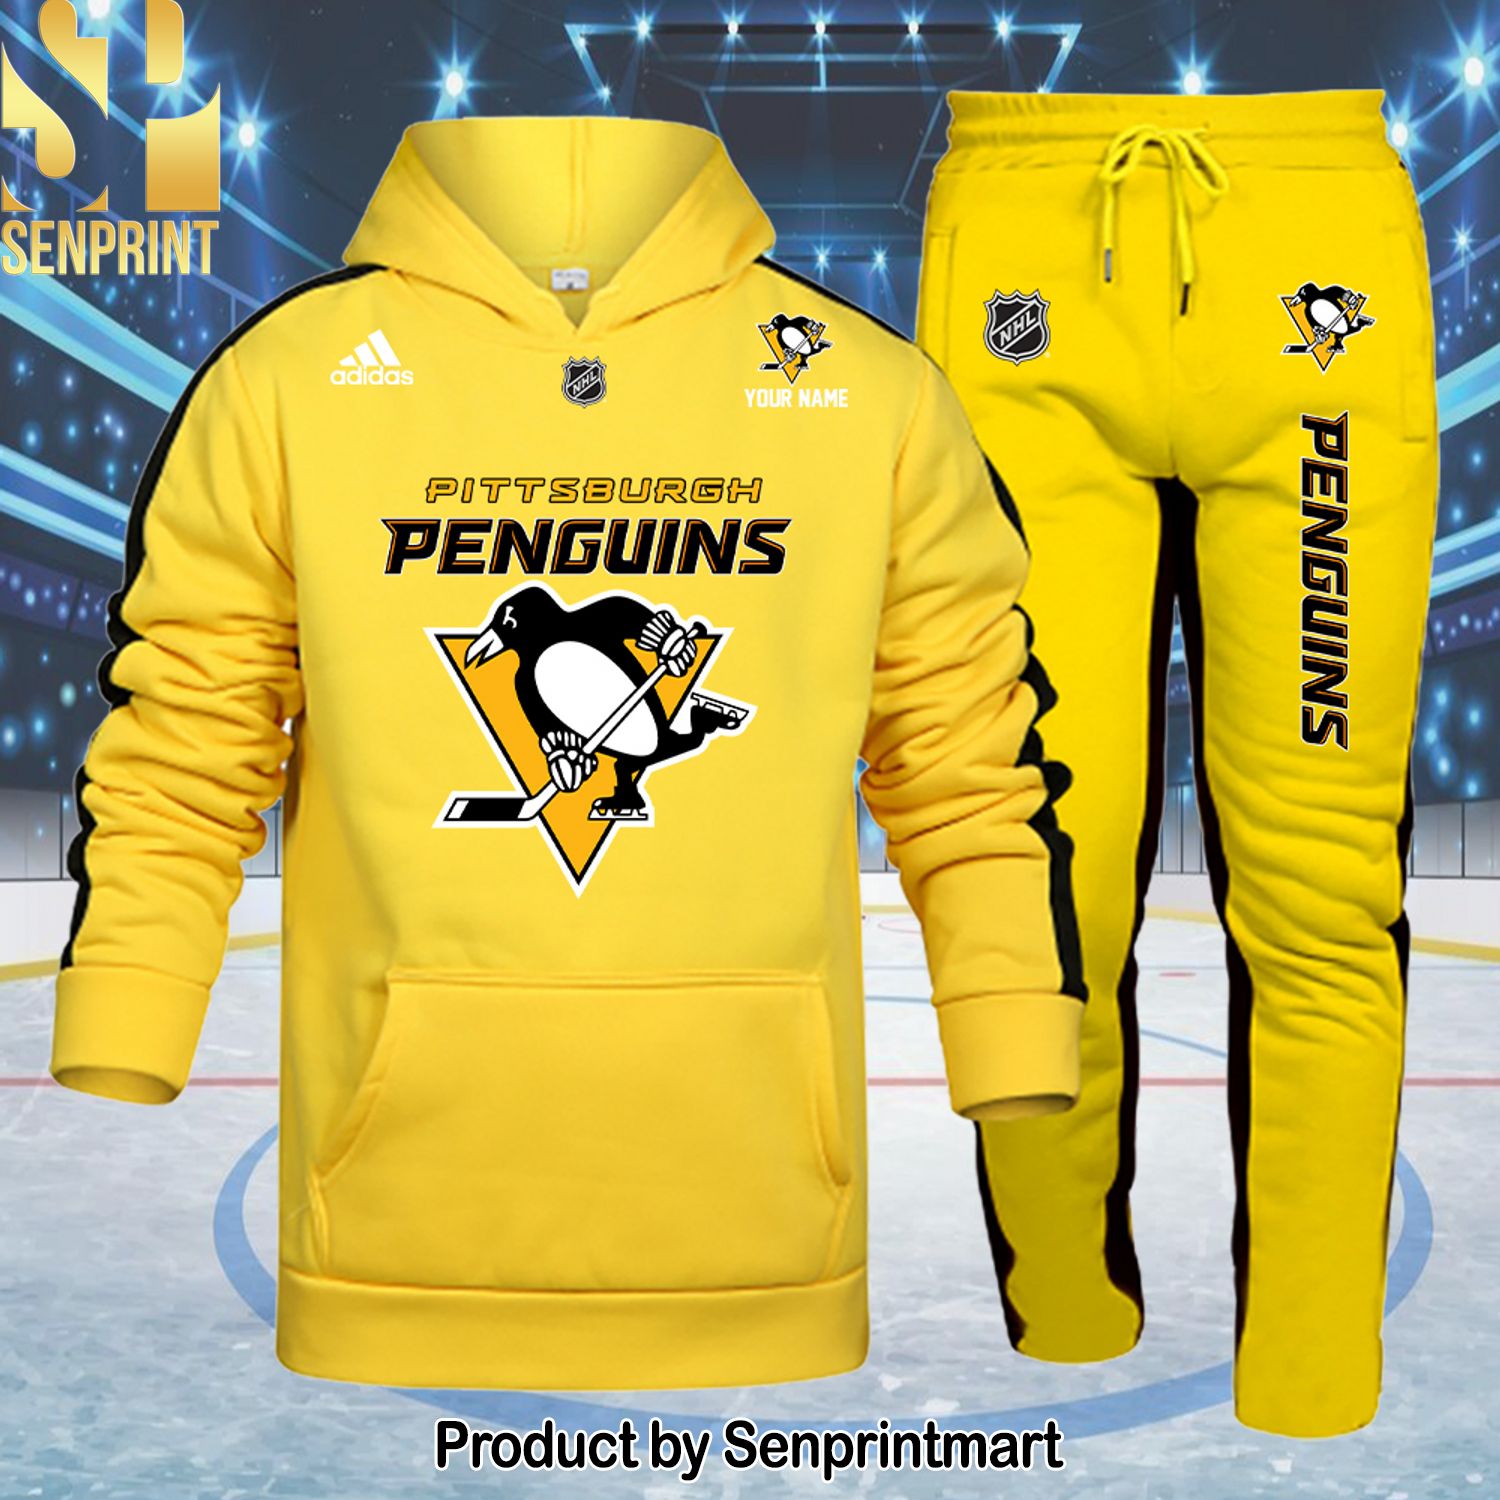 Pittsburgh Penguins Hot Fashion Shirt and Pants